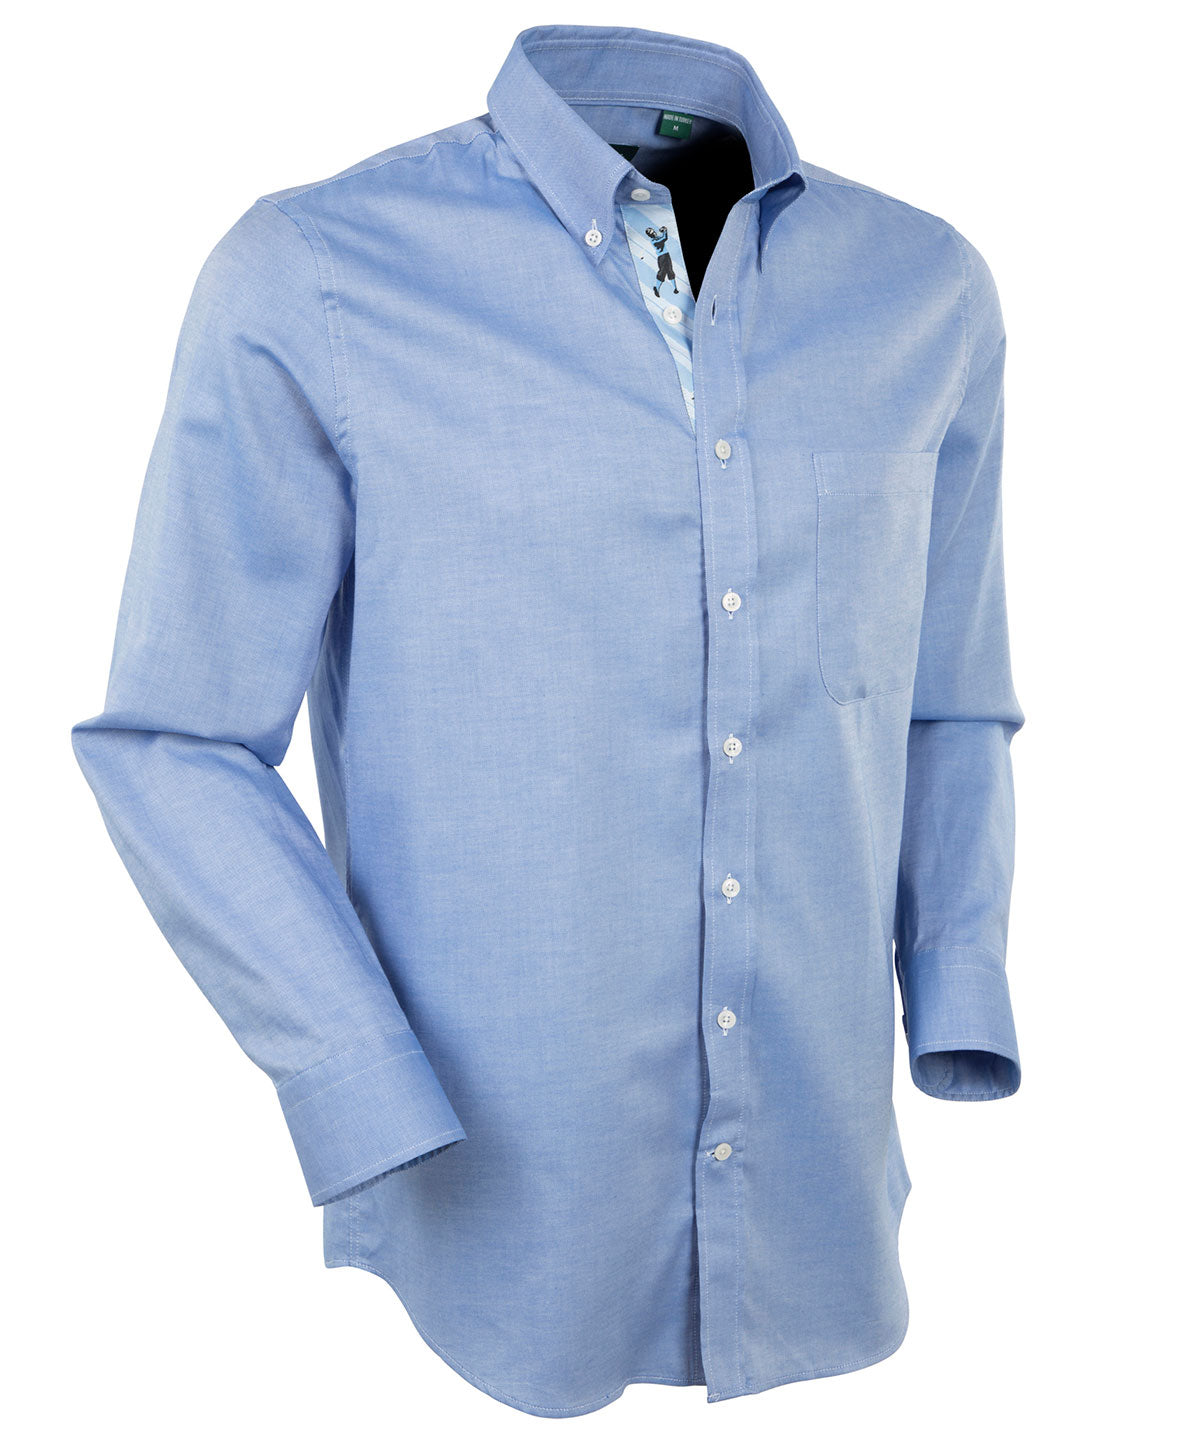 Signature 100% Cotton Oxford Solid Button-Down Shirt - Trim Fit